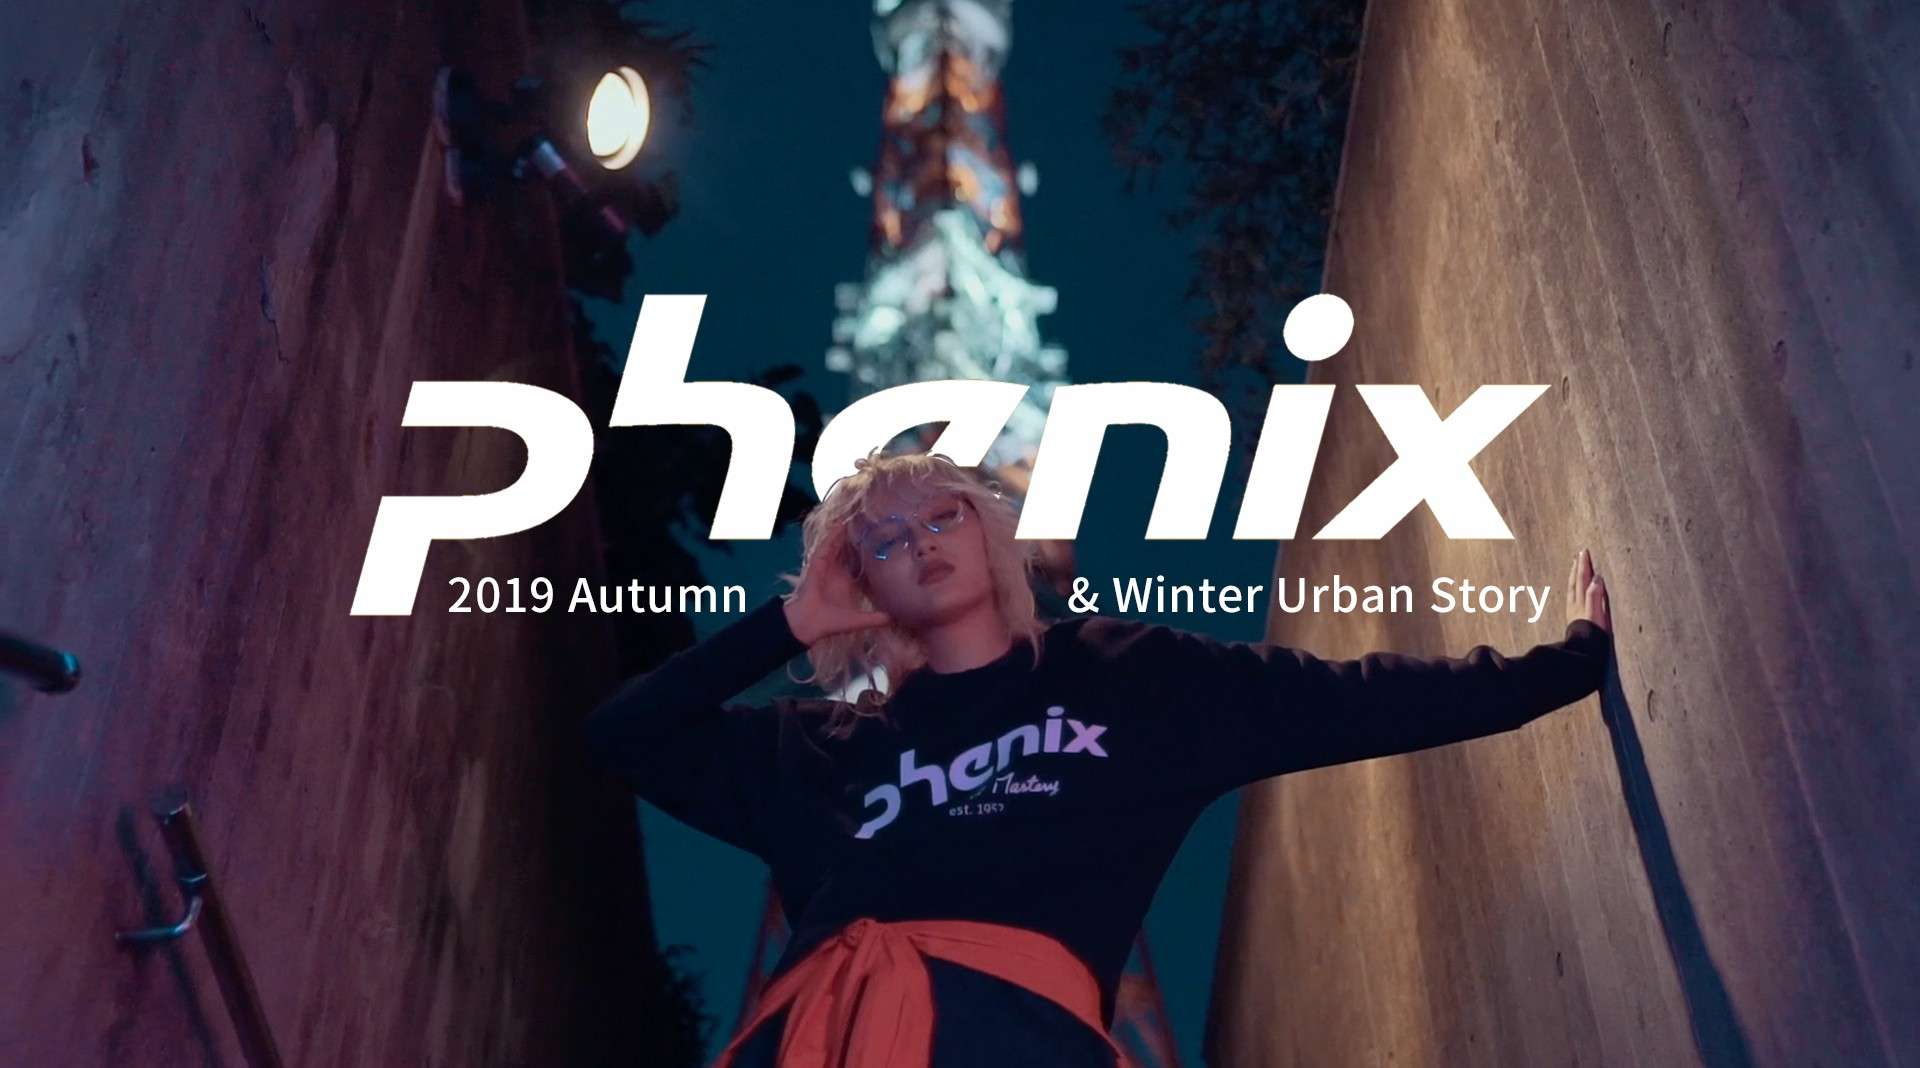 Phenix 2019 Autumn & Winter Urban Story